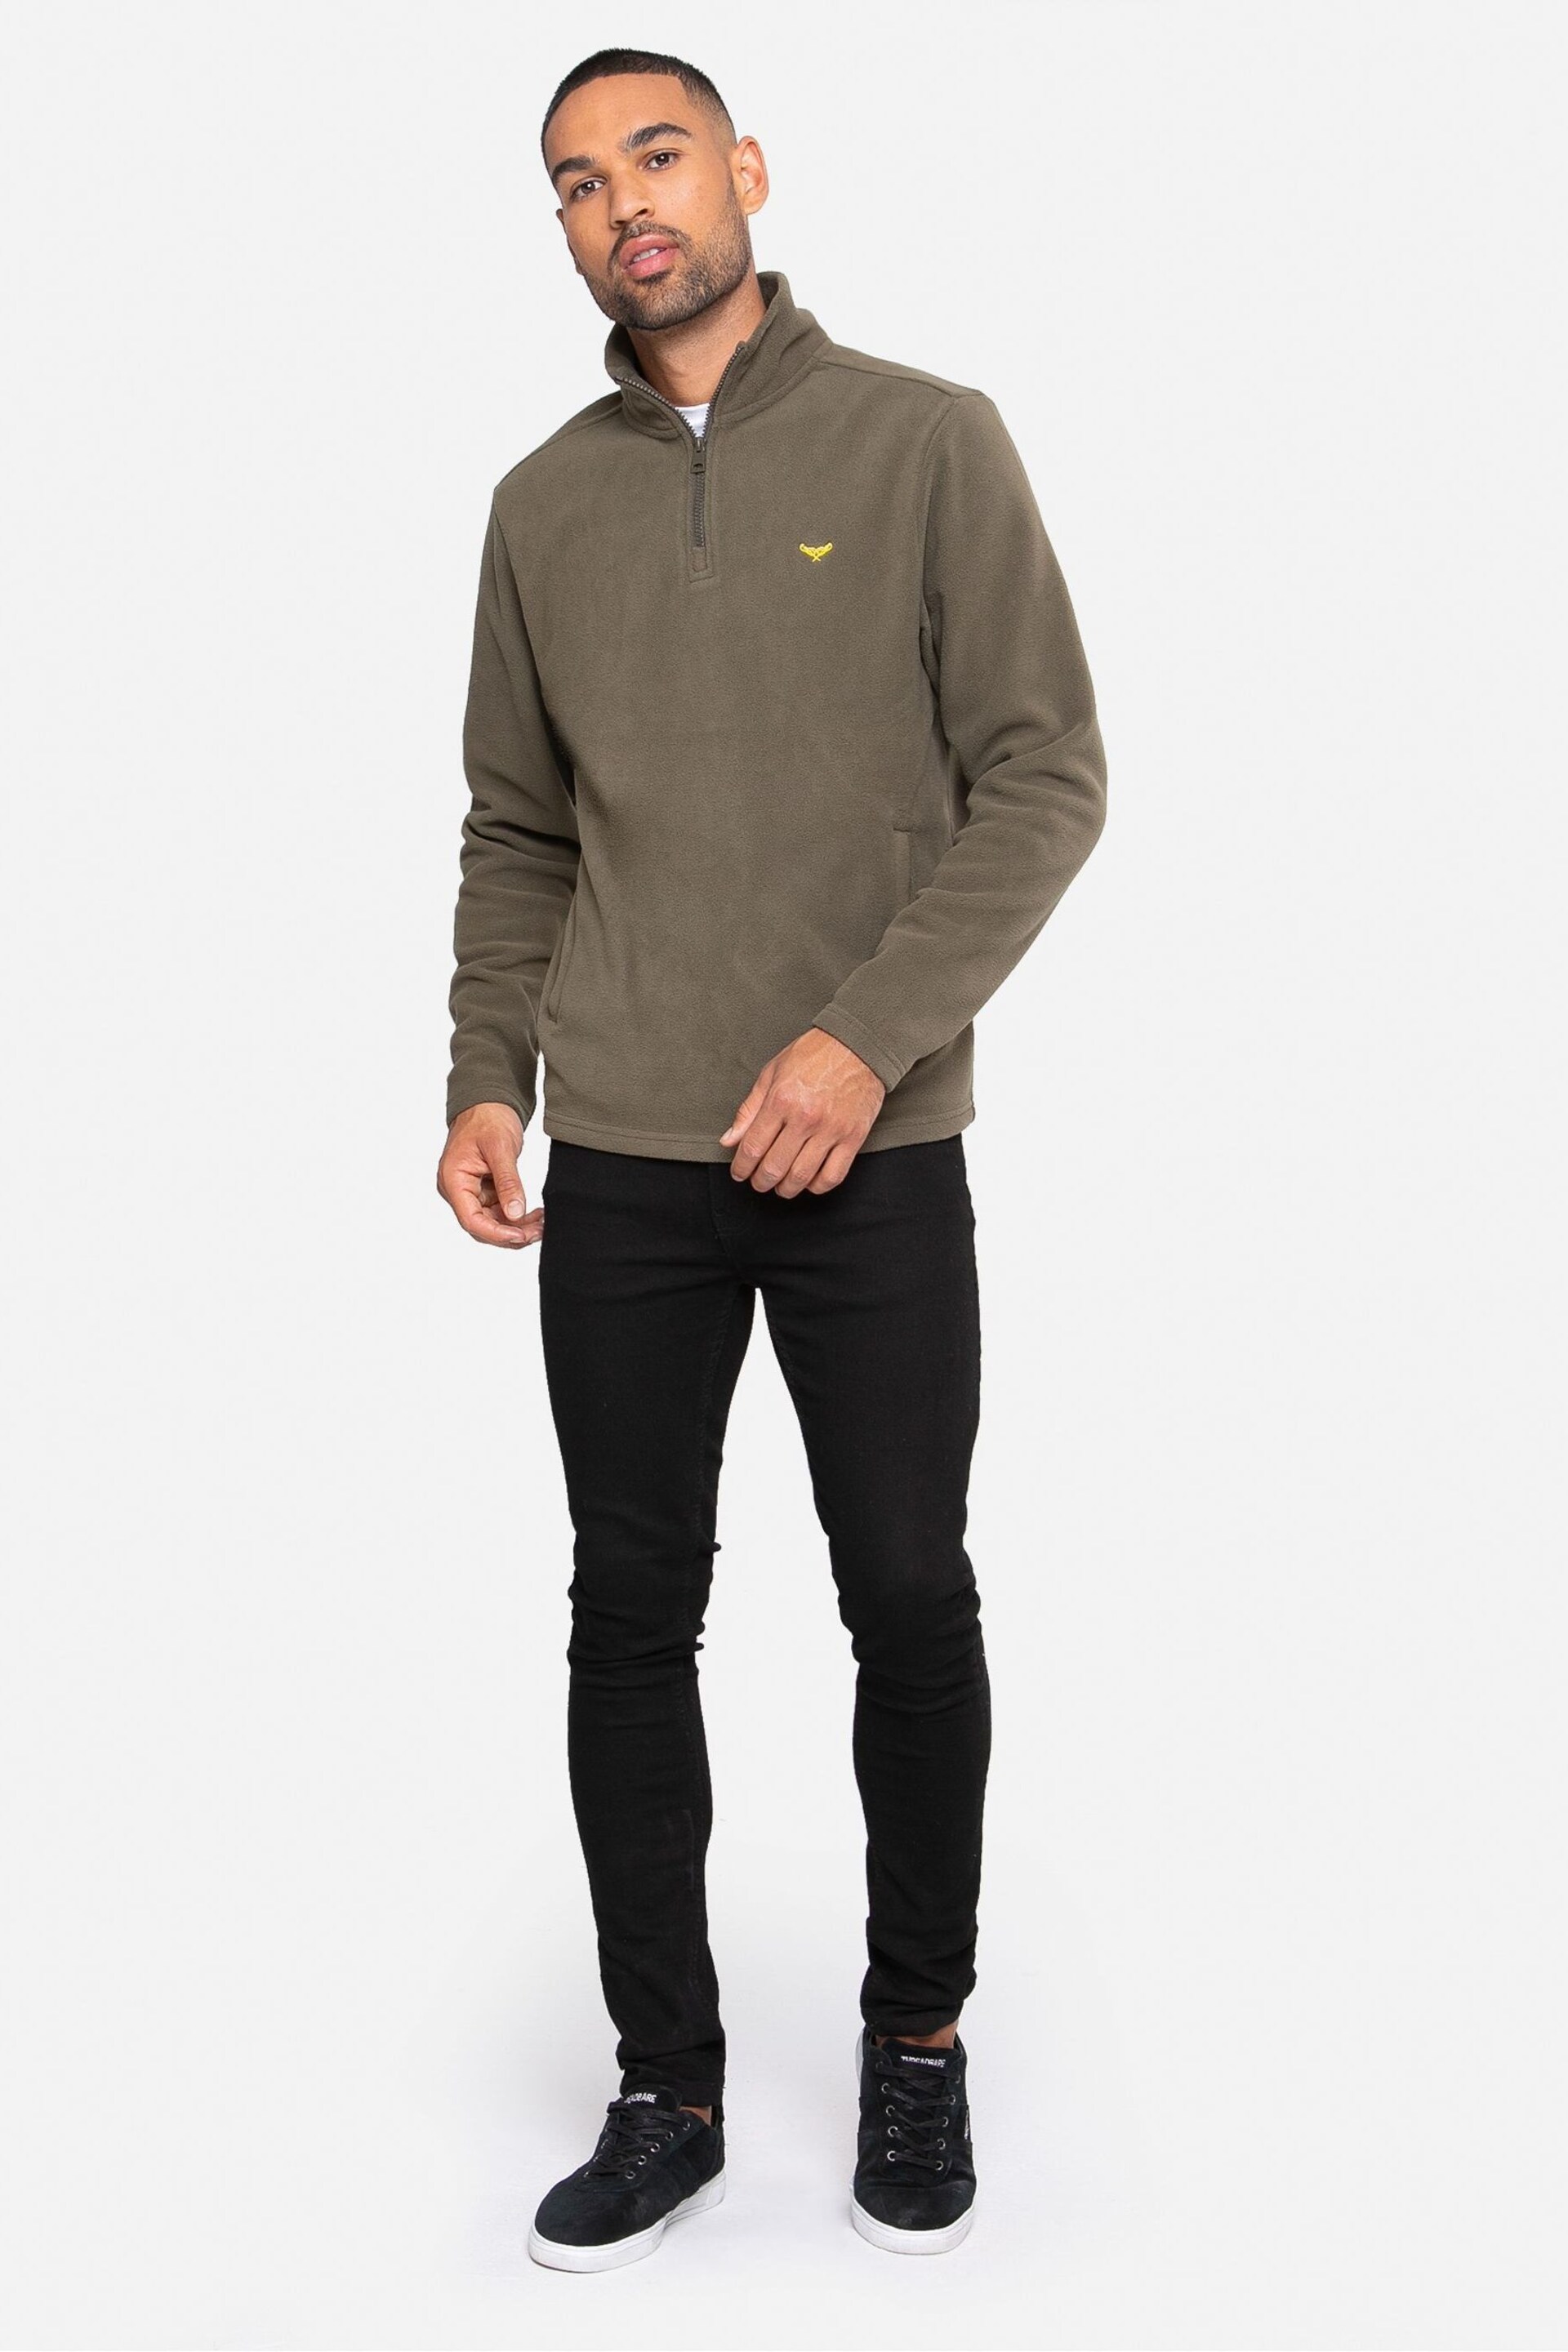 Threadbare Green 1/4 Zip Fleece Sweatshirt - Image 3 of 4